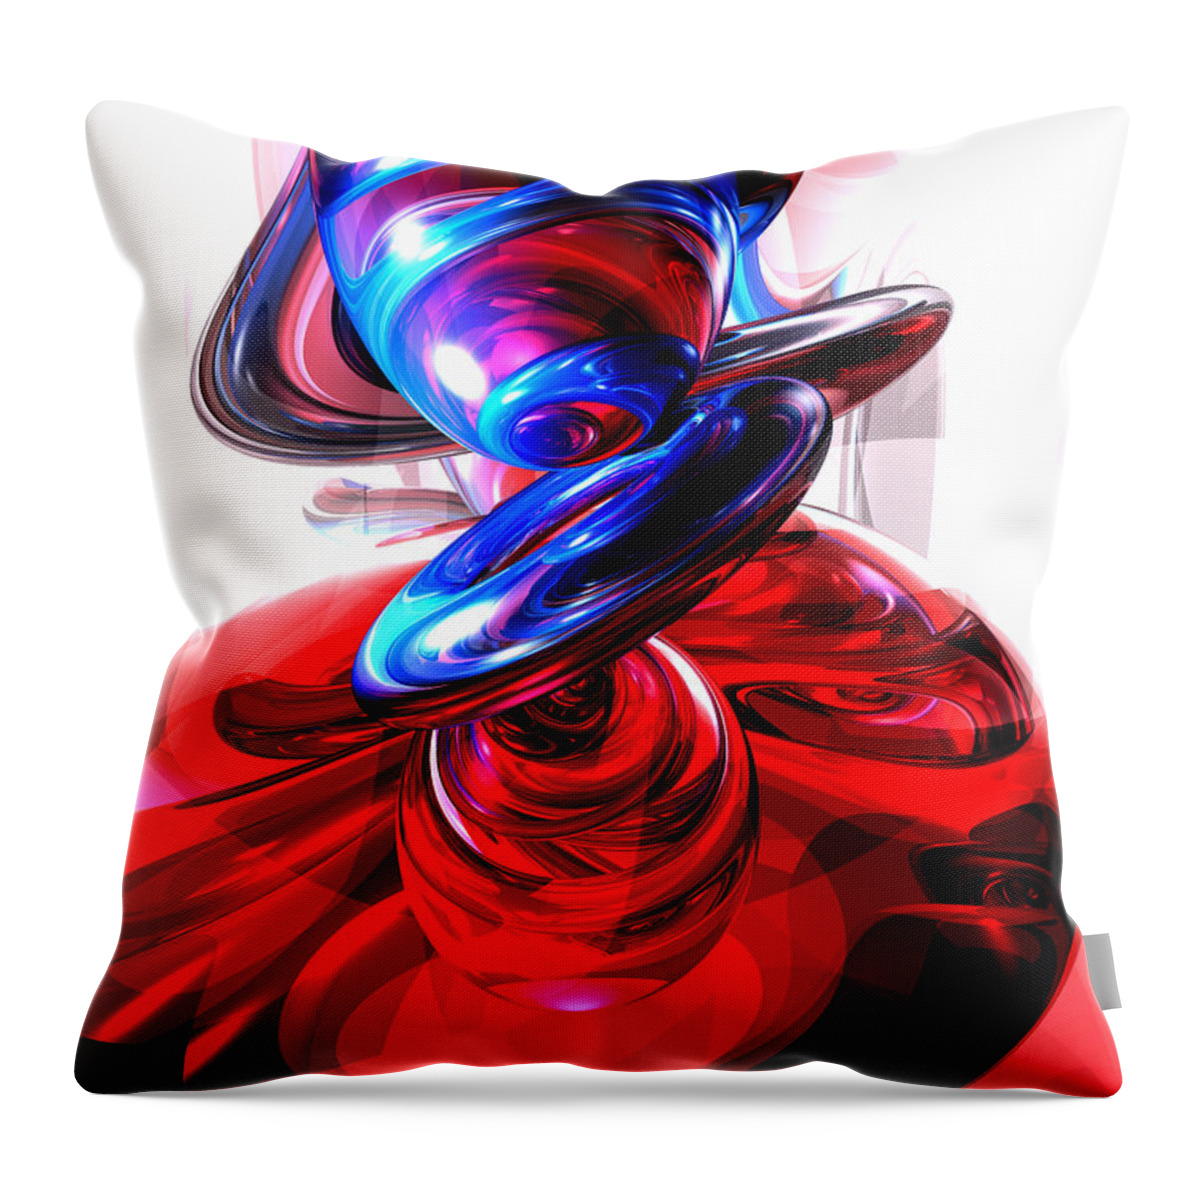 3d Throw Pillow featuring the digital art Windstorm Abstract by Alexander Butler